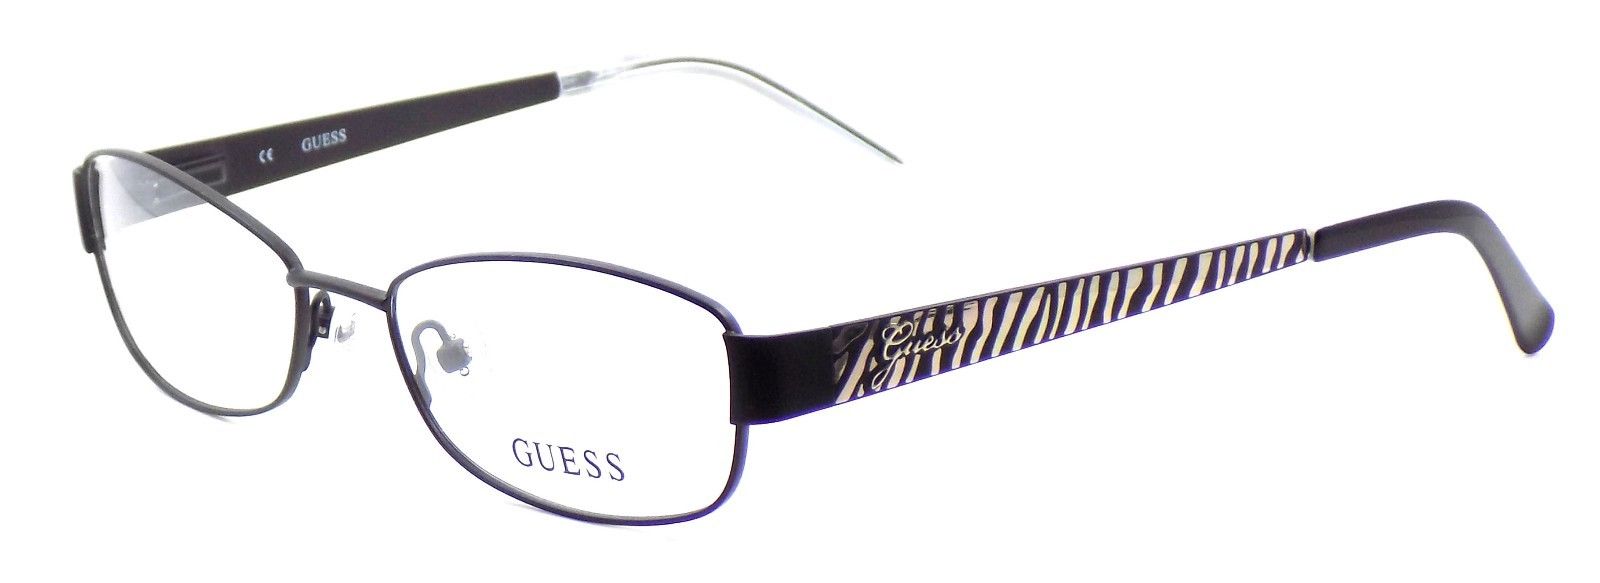 1-GUESS GU2404 BLK Women's Eyeglasses Frames 53-17-135 Black + CASE-715583959576-IKSpecs